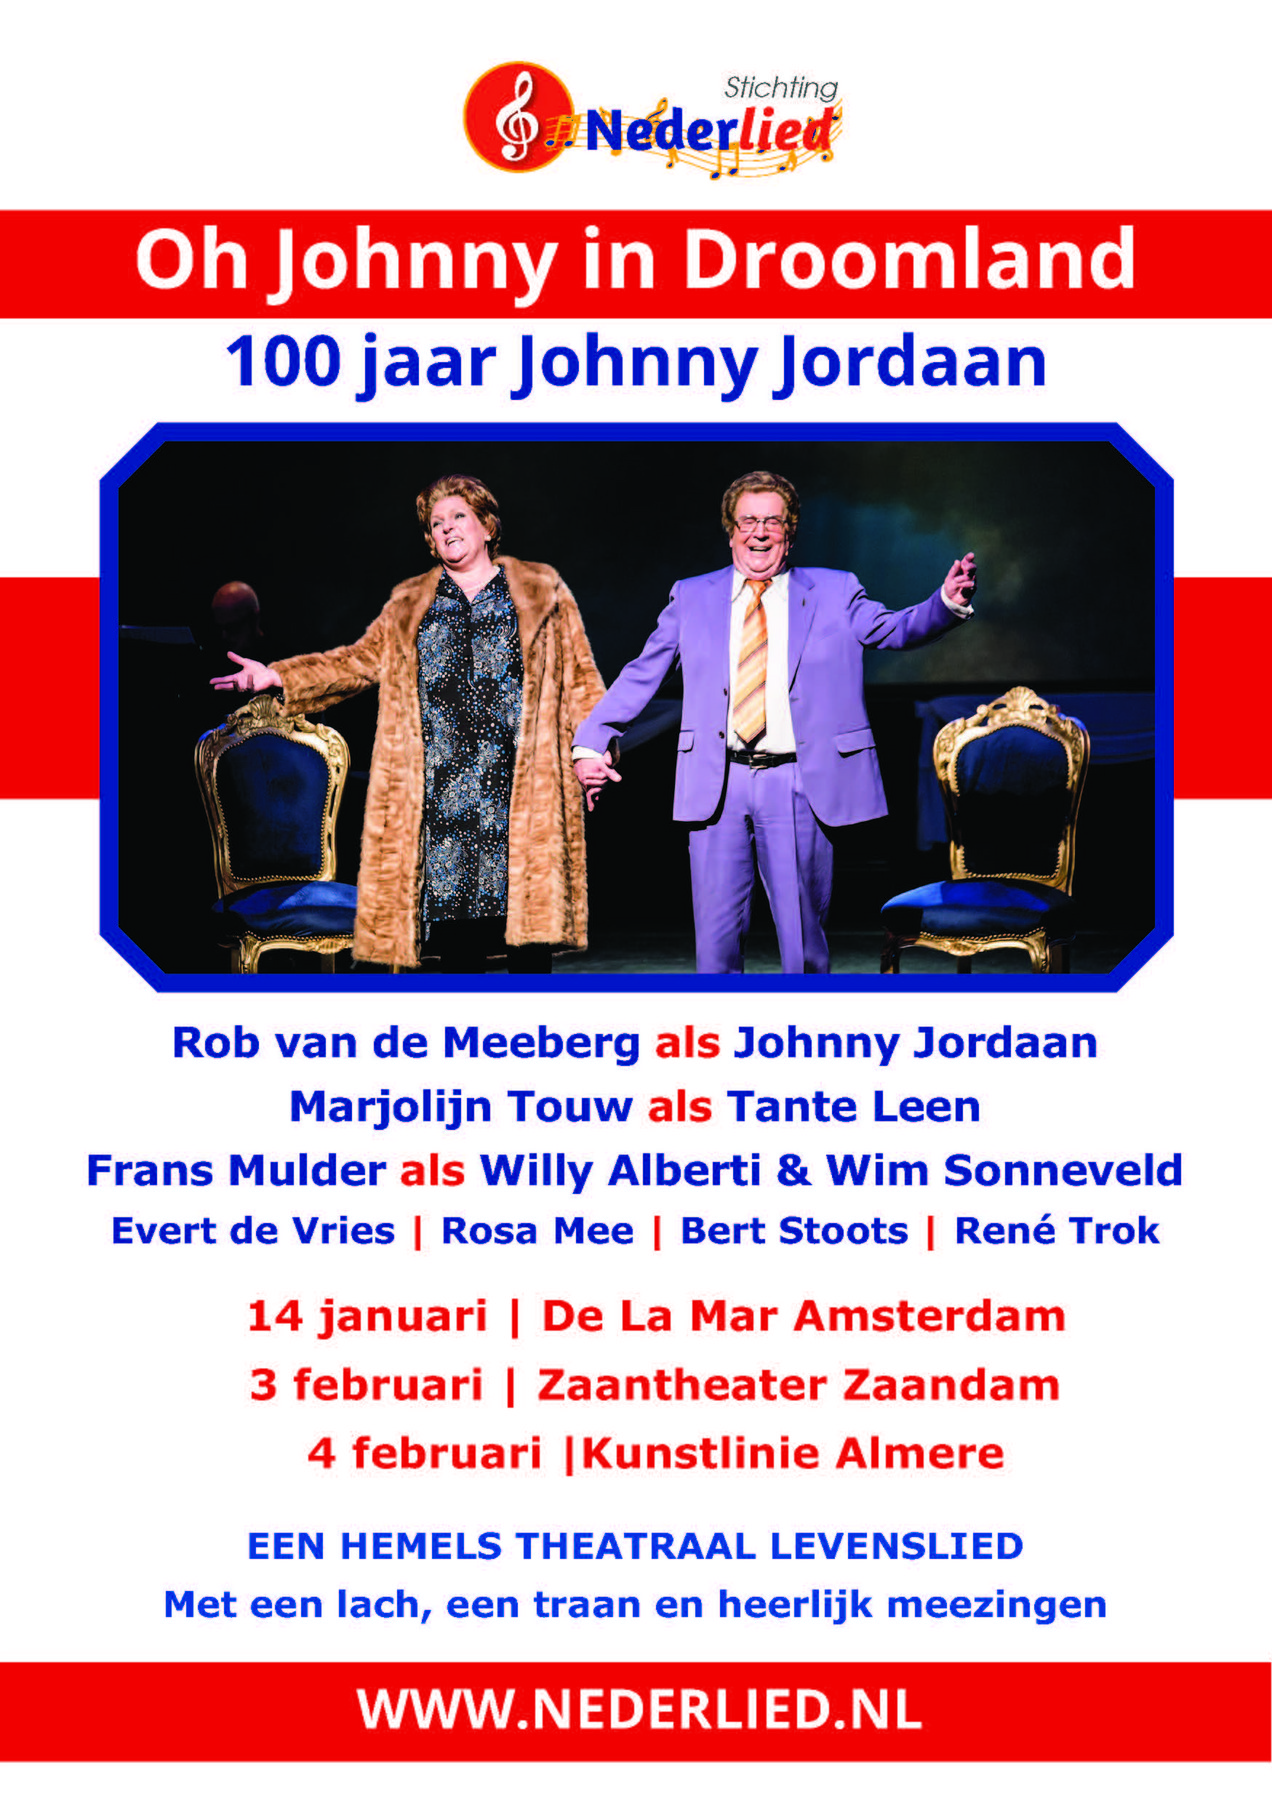 Oh Johnny in Droomland - 100 jaar Johnny Jordaan -  Nederlied theater